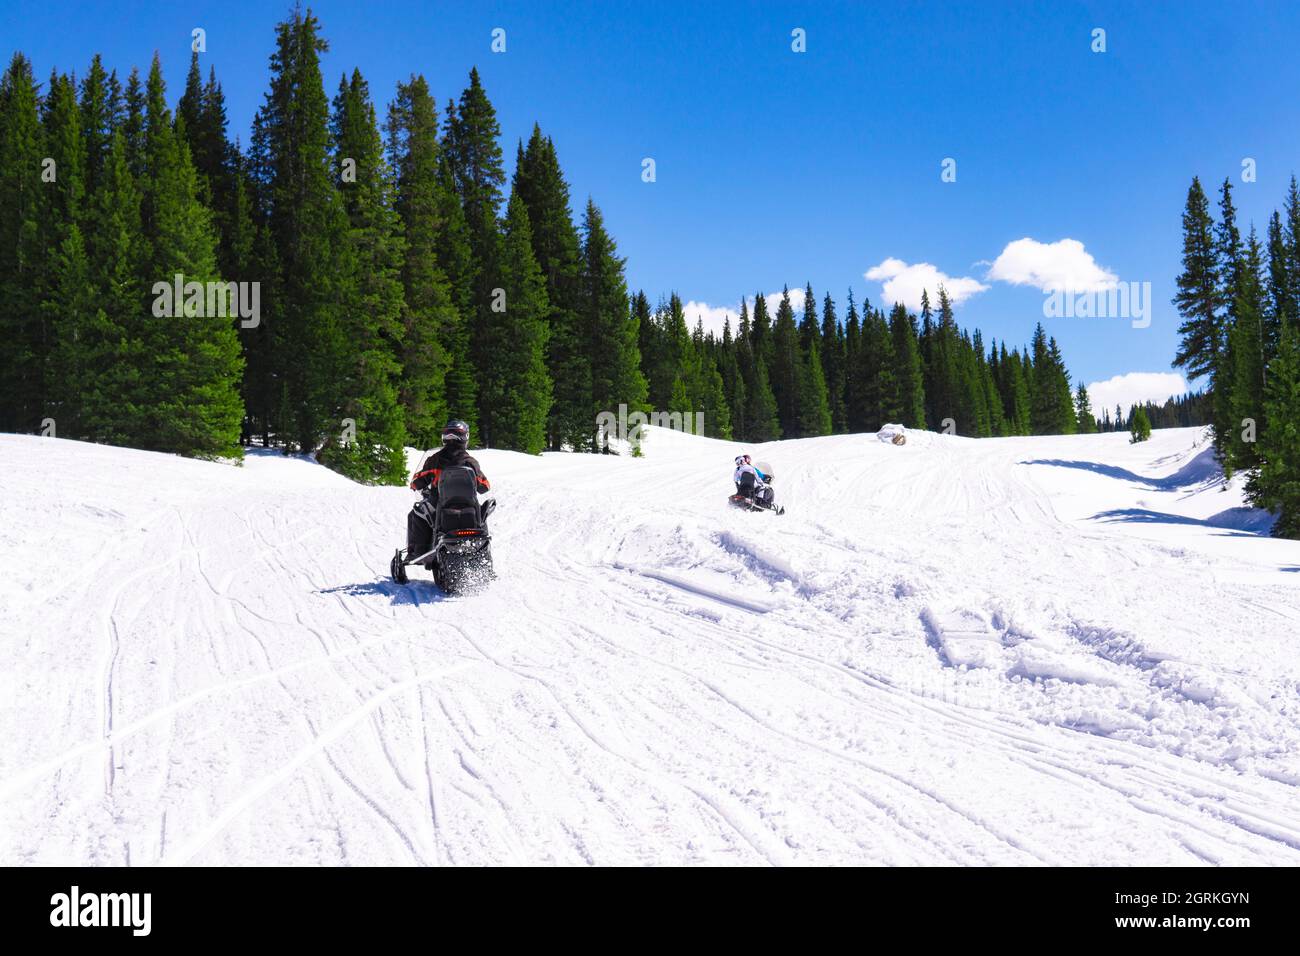 Snow Mobile Winter Recreation Concept In Snow Mountains Stock Photo